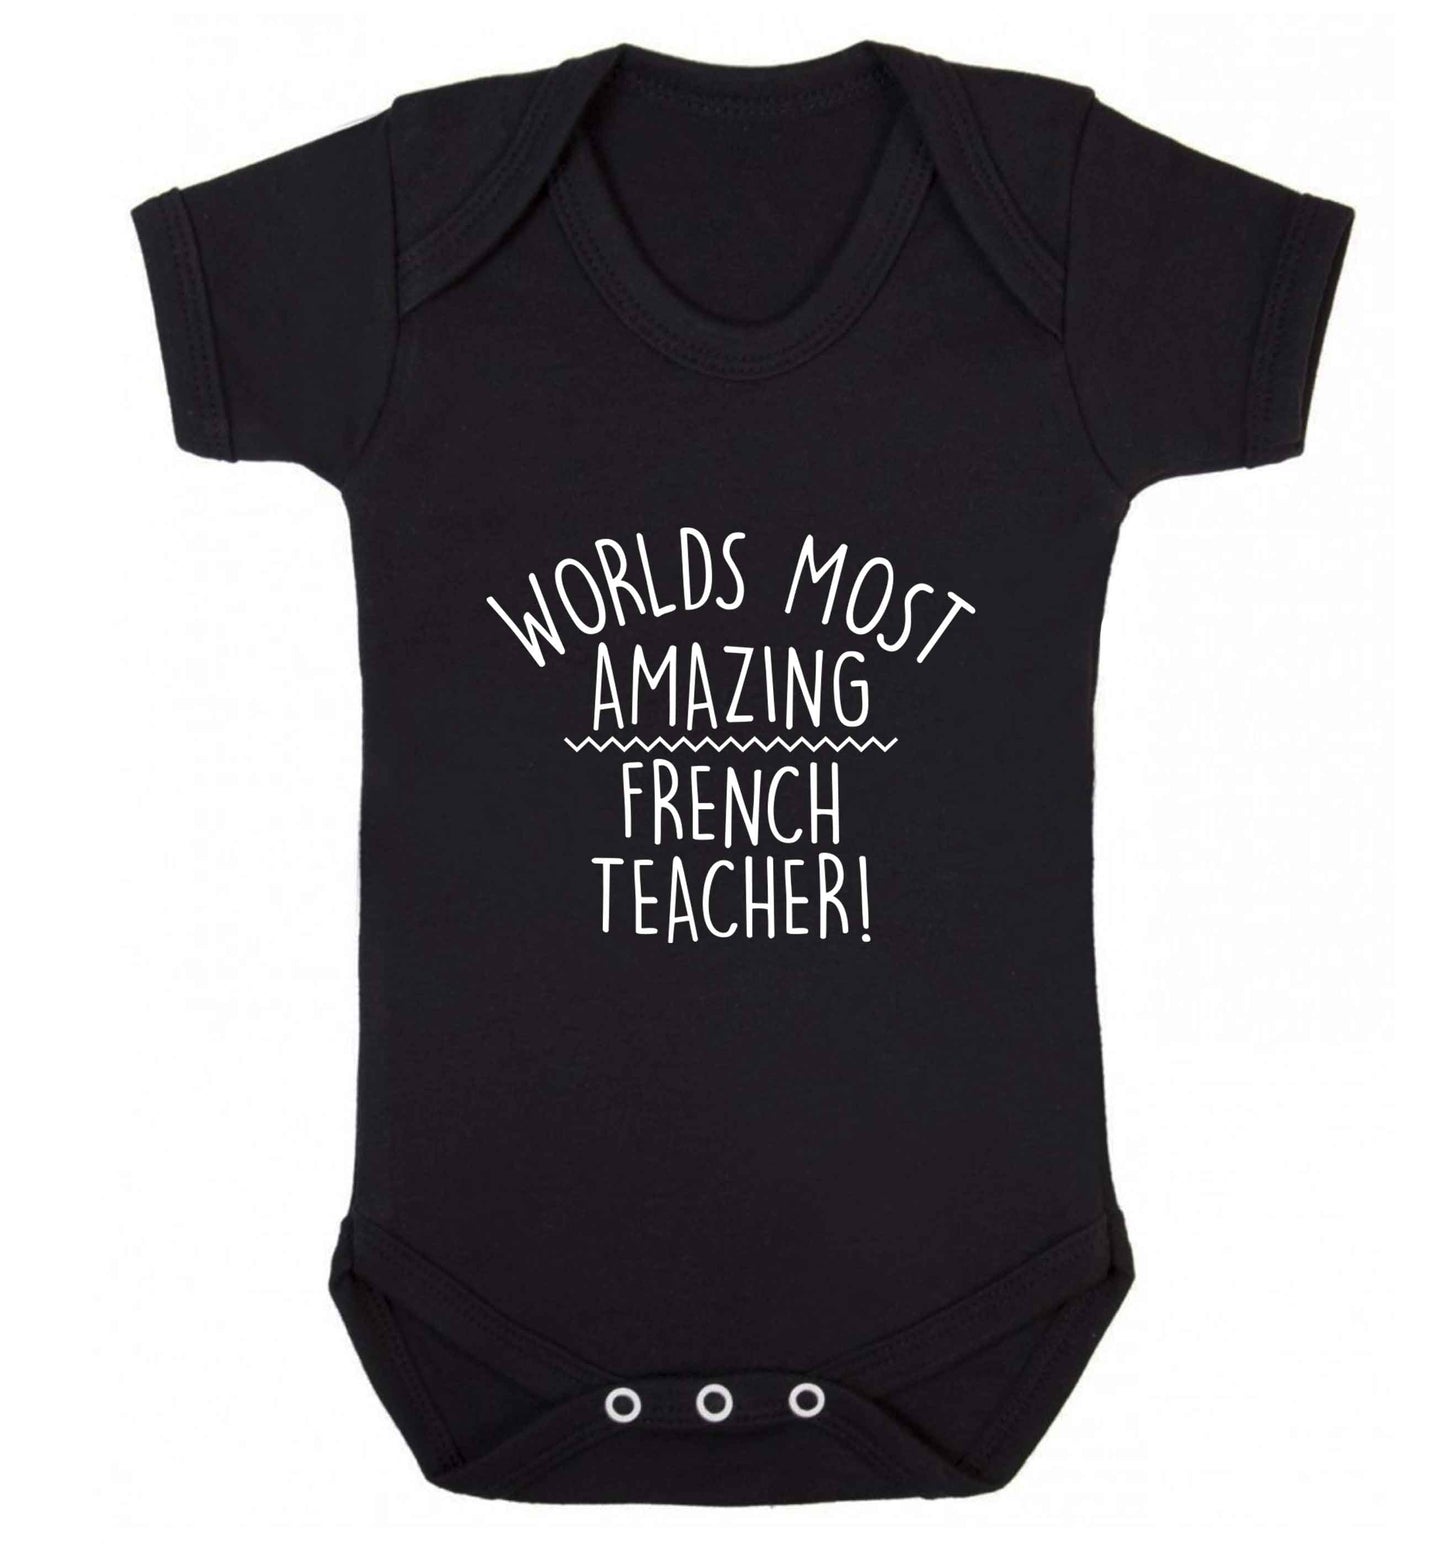 Worlds most amazing French teacher baby vest black 18-24 months